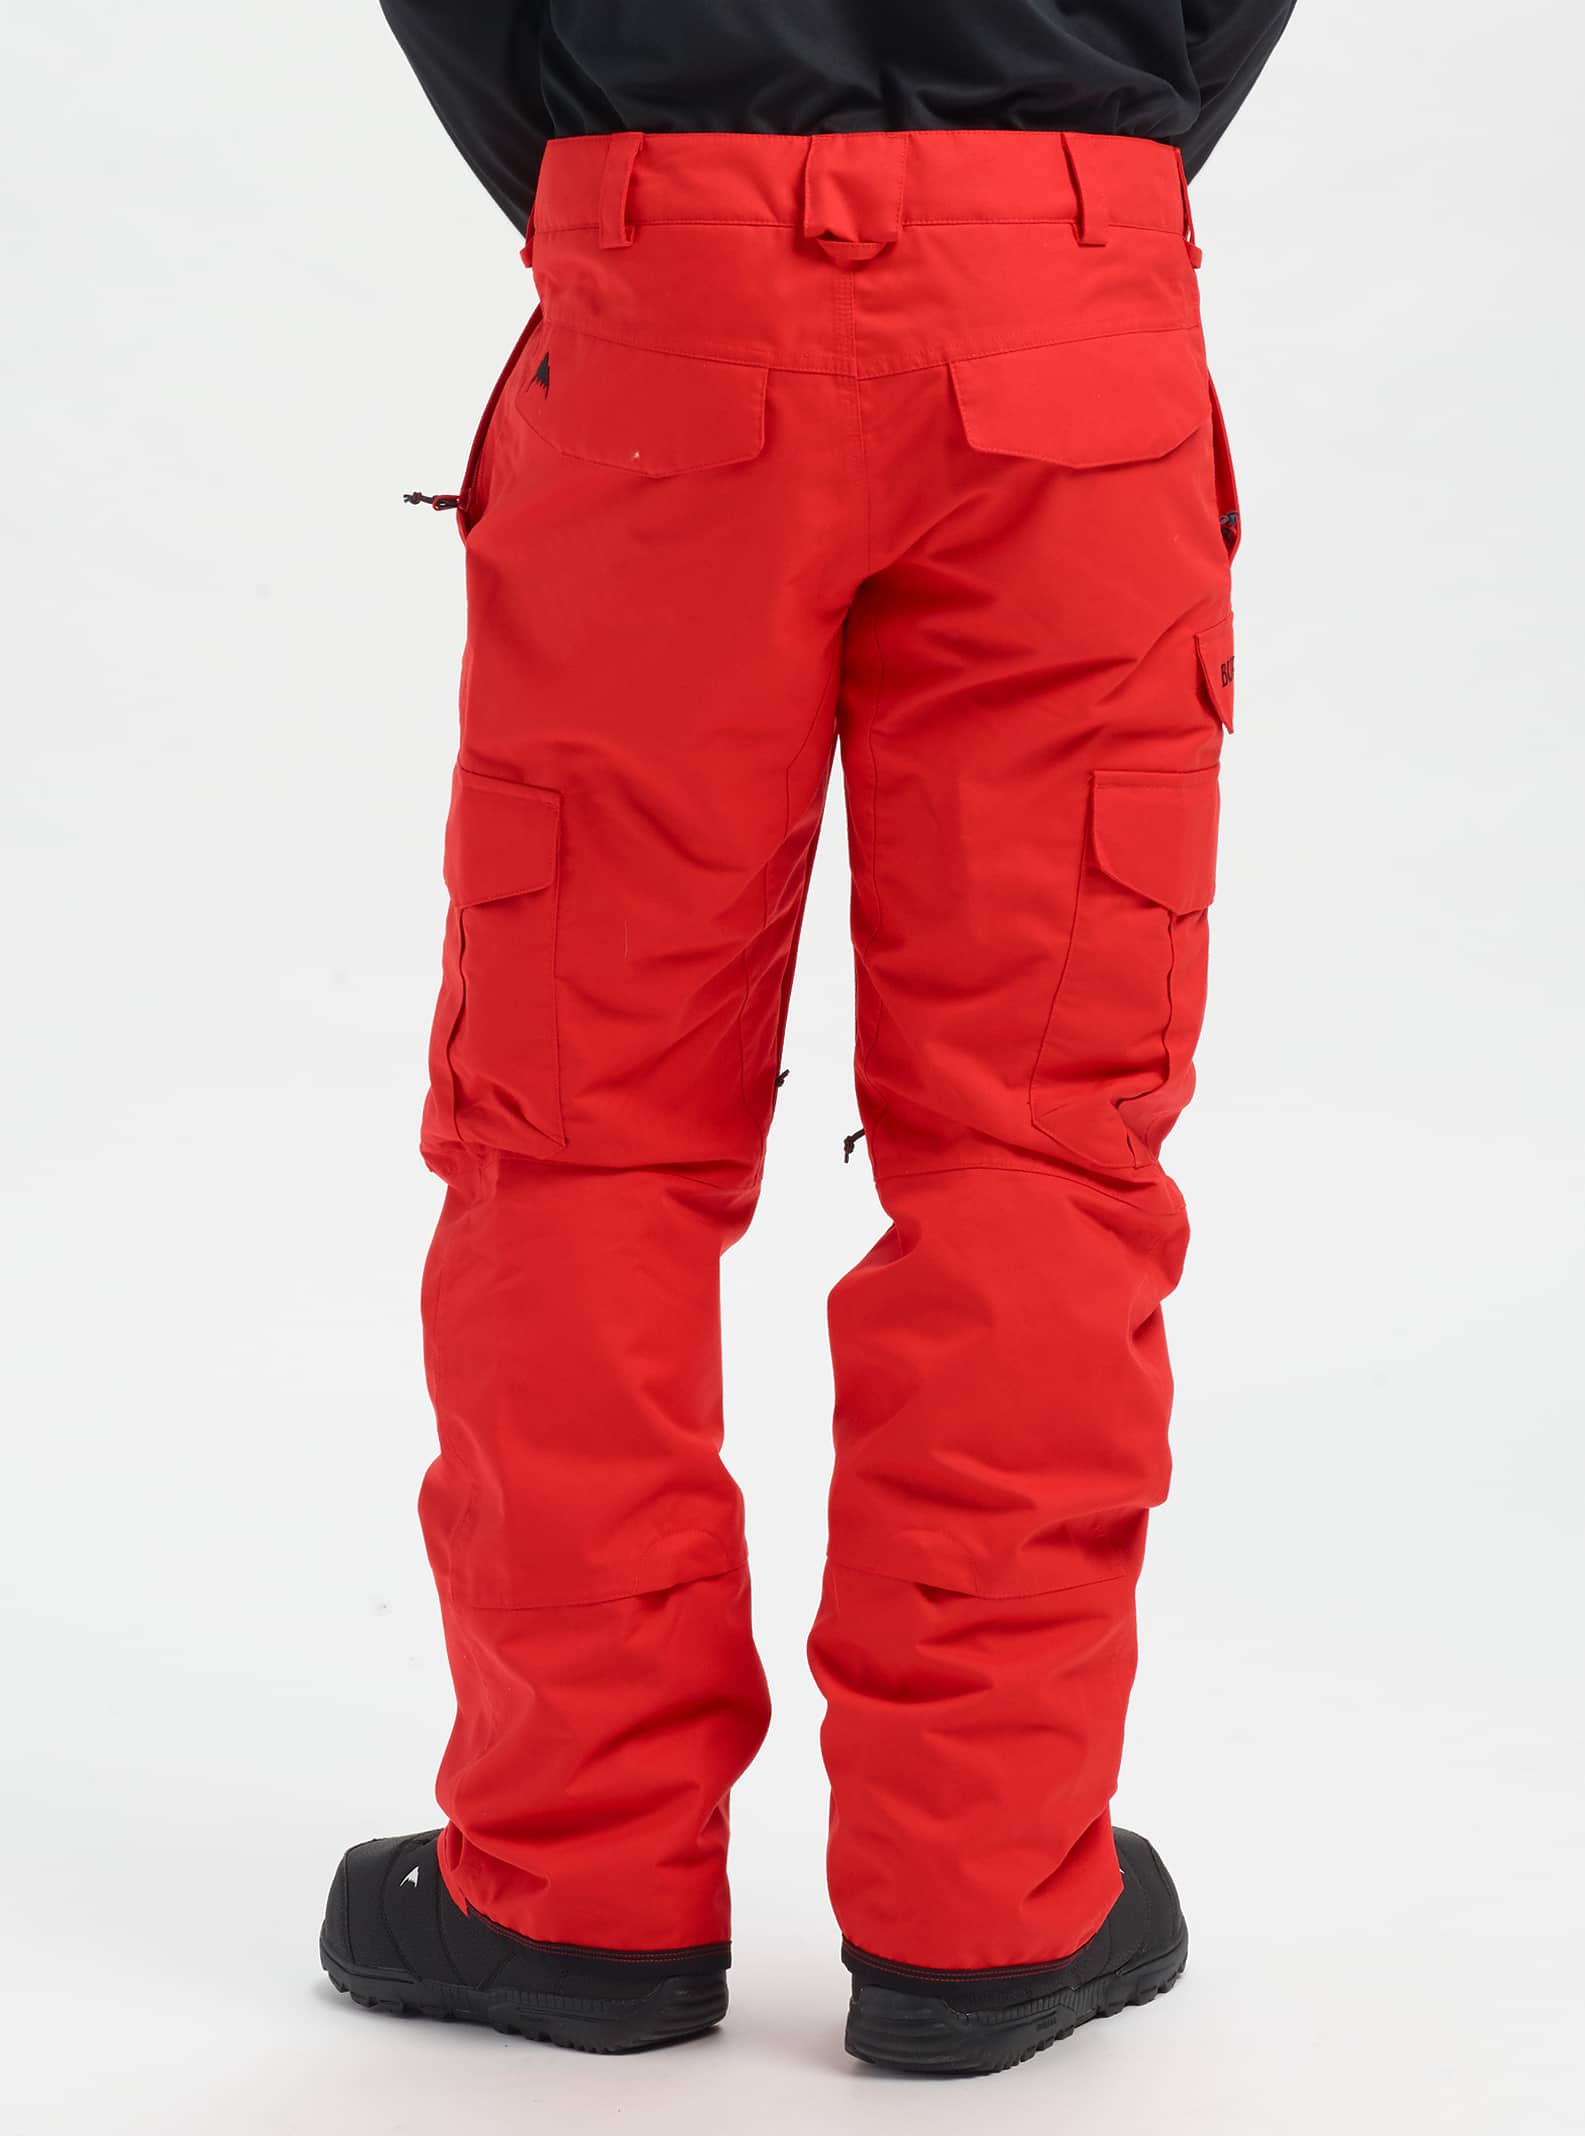 Men's Burton Cargo Pant - Relaxed Fit | Burton.com Winter 2020 GB